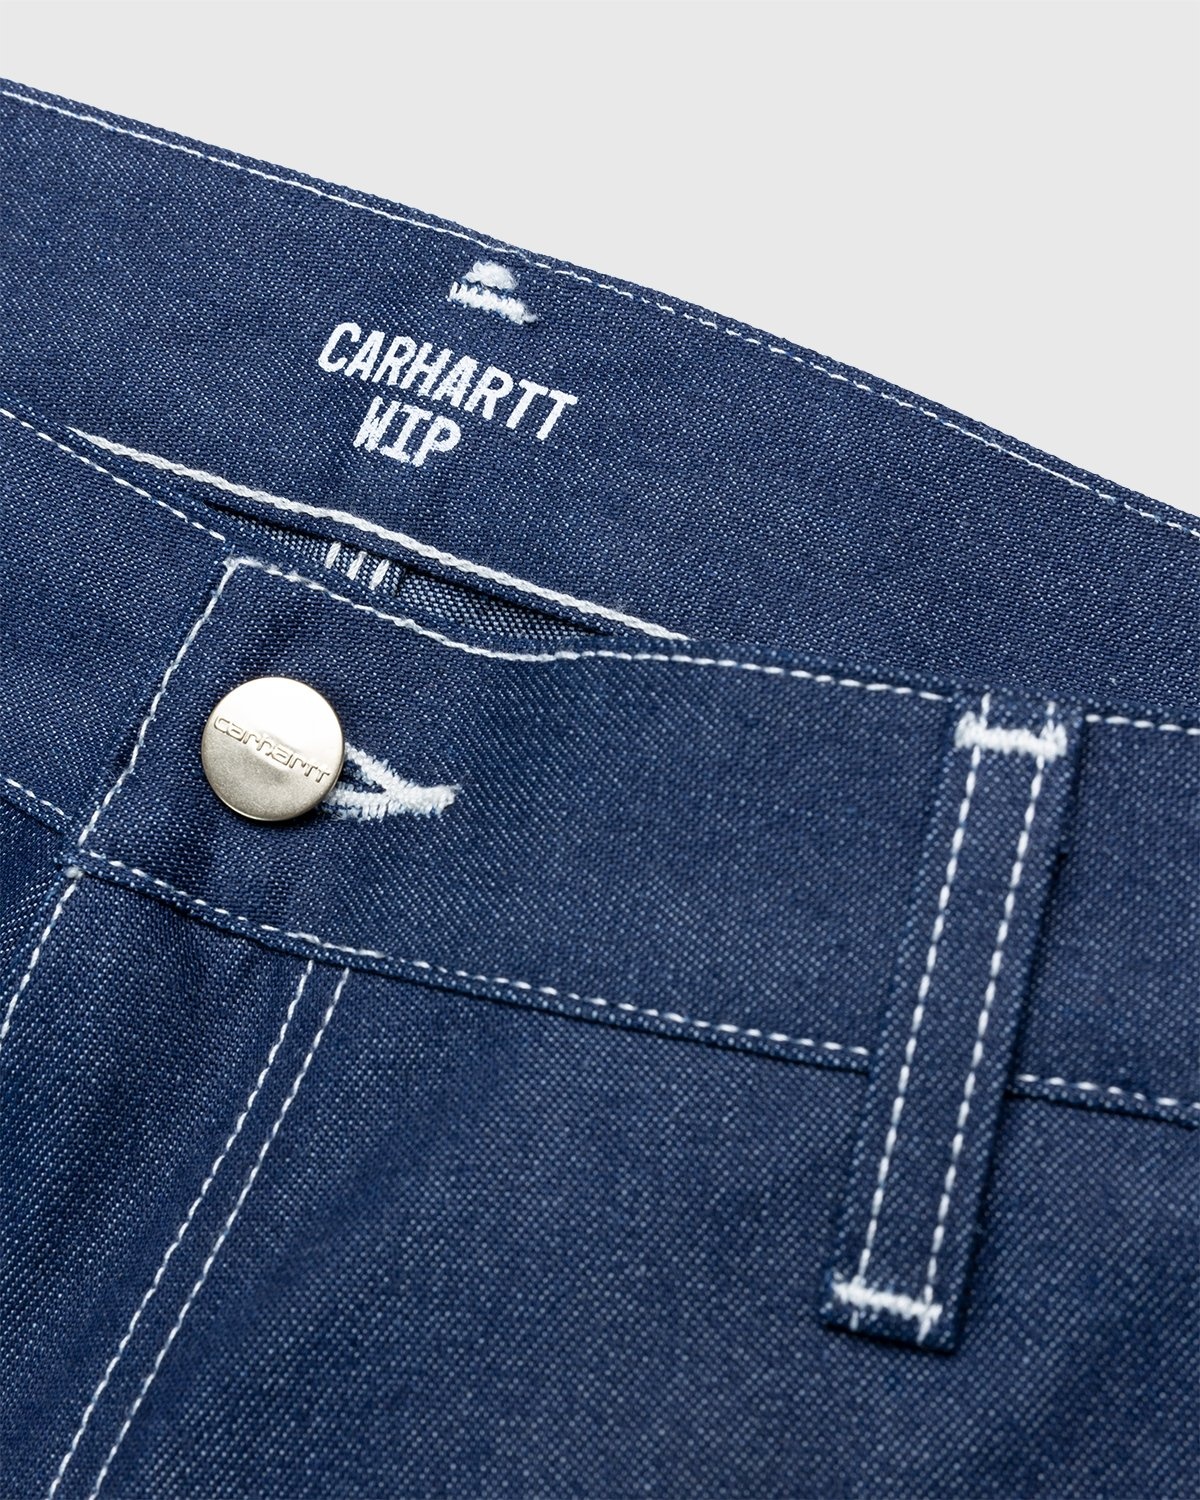 Carhartt WIP – Ruck Single Knee Pant Blue Rigid - Pants - Blue - Image 5